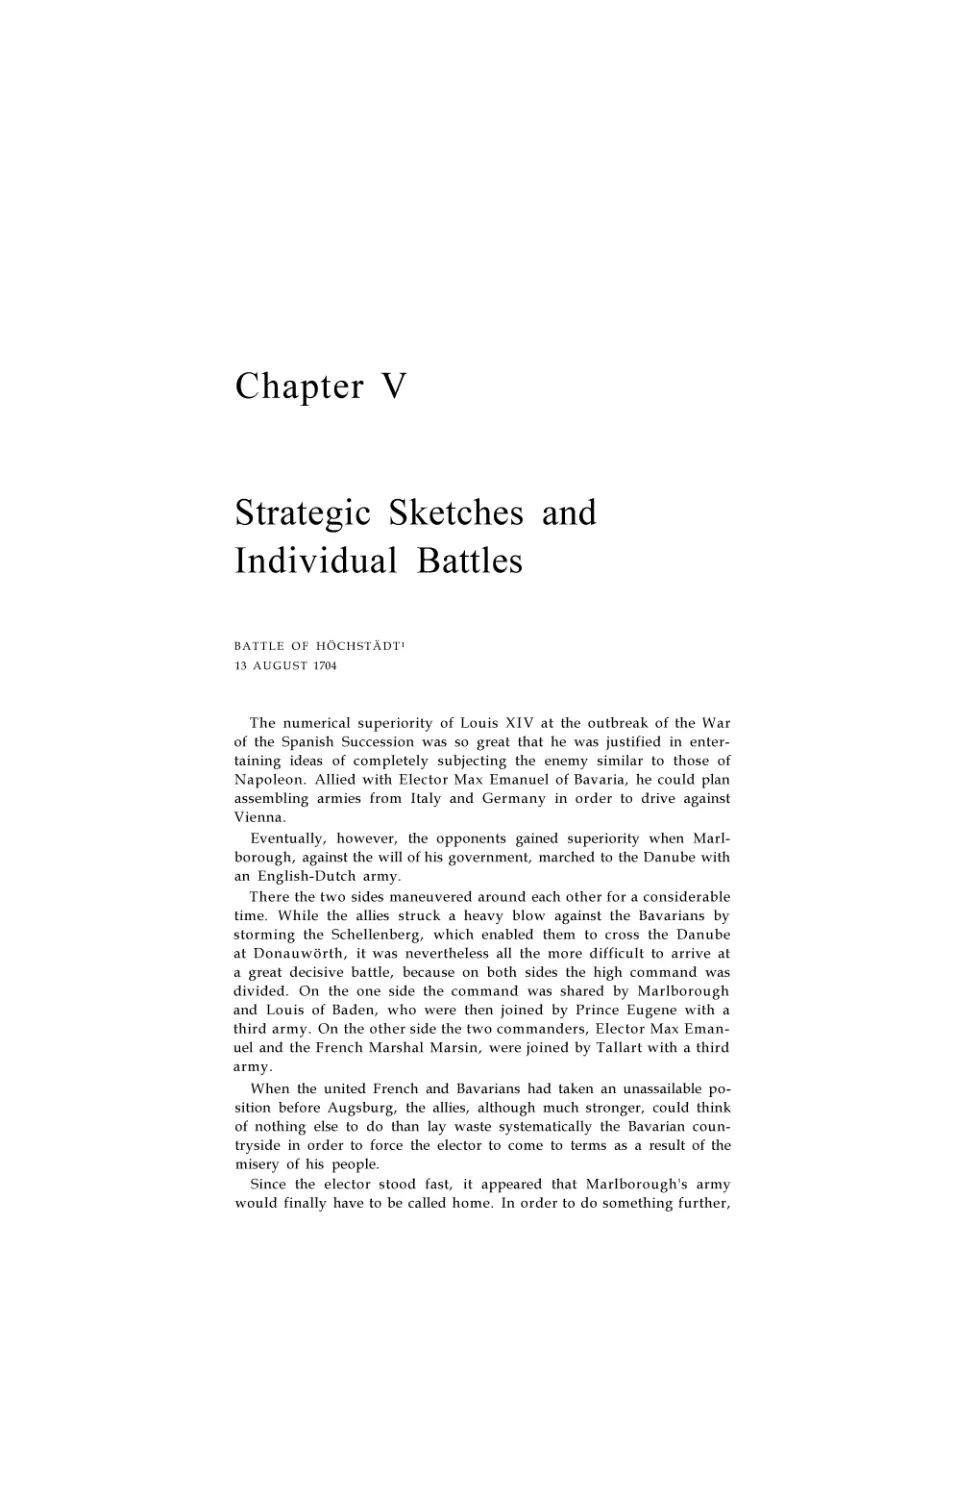 Strategic Sketches and Individual Battles